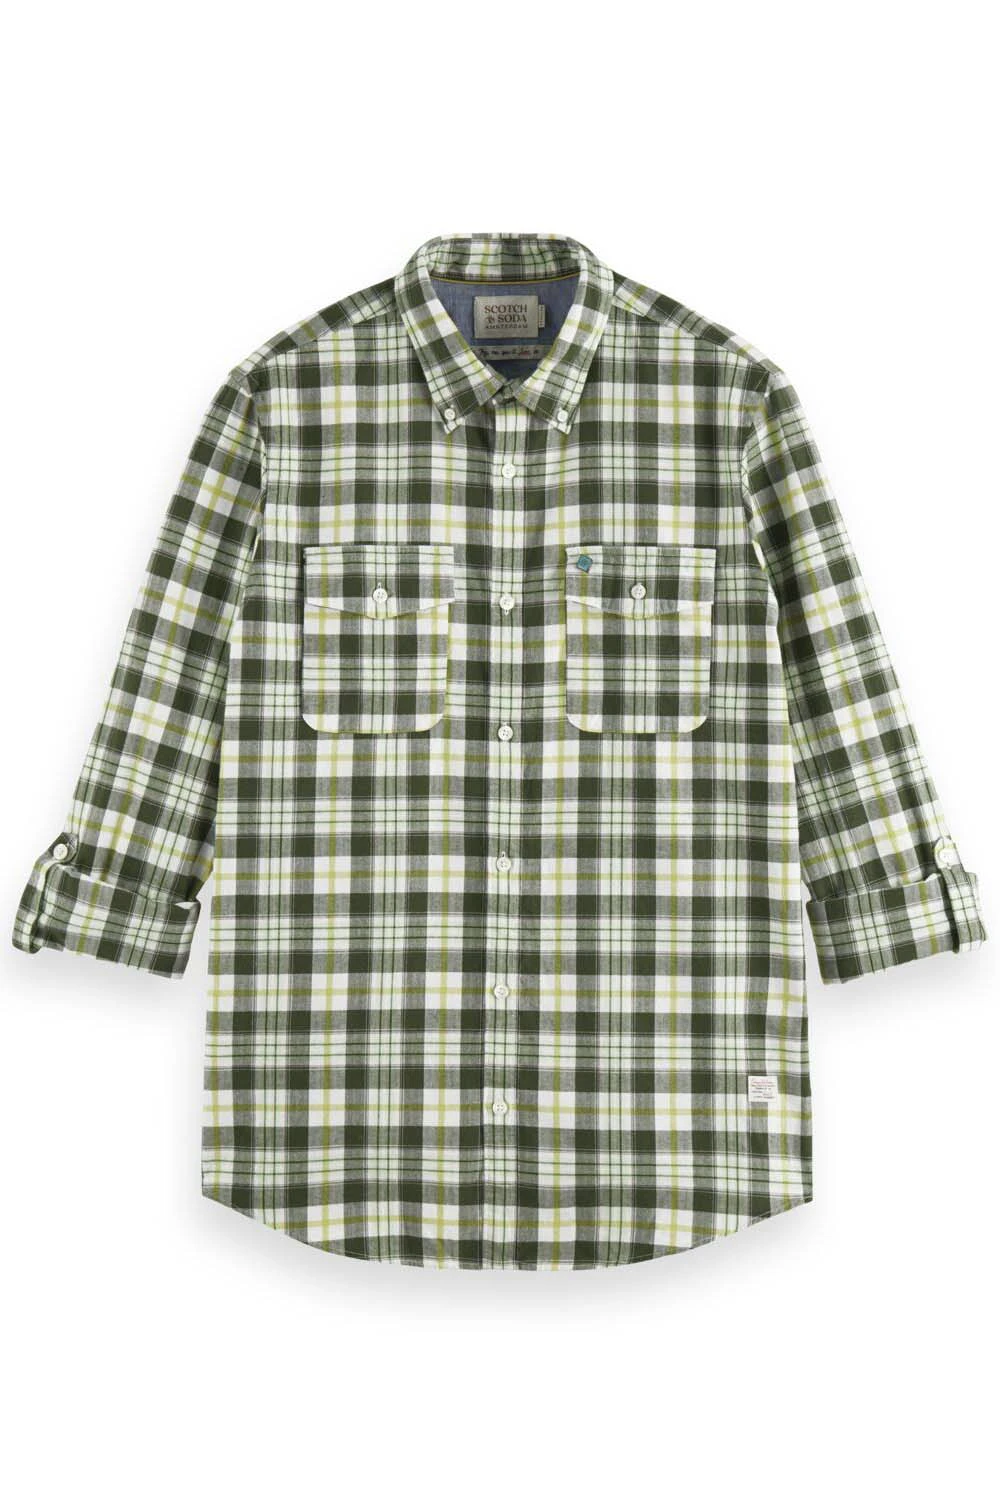 Scotch & Soda - Lightweight Flannel Check Shirt - Green Check